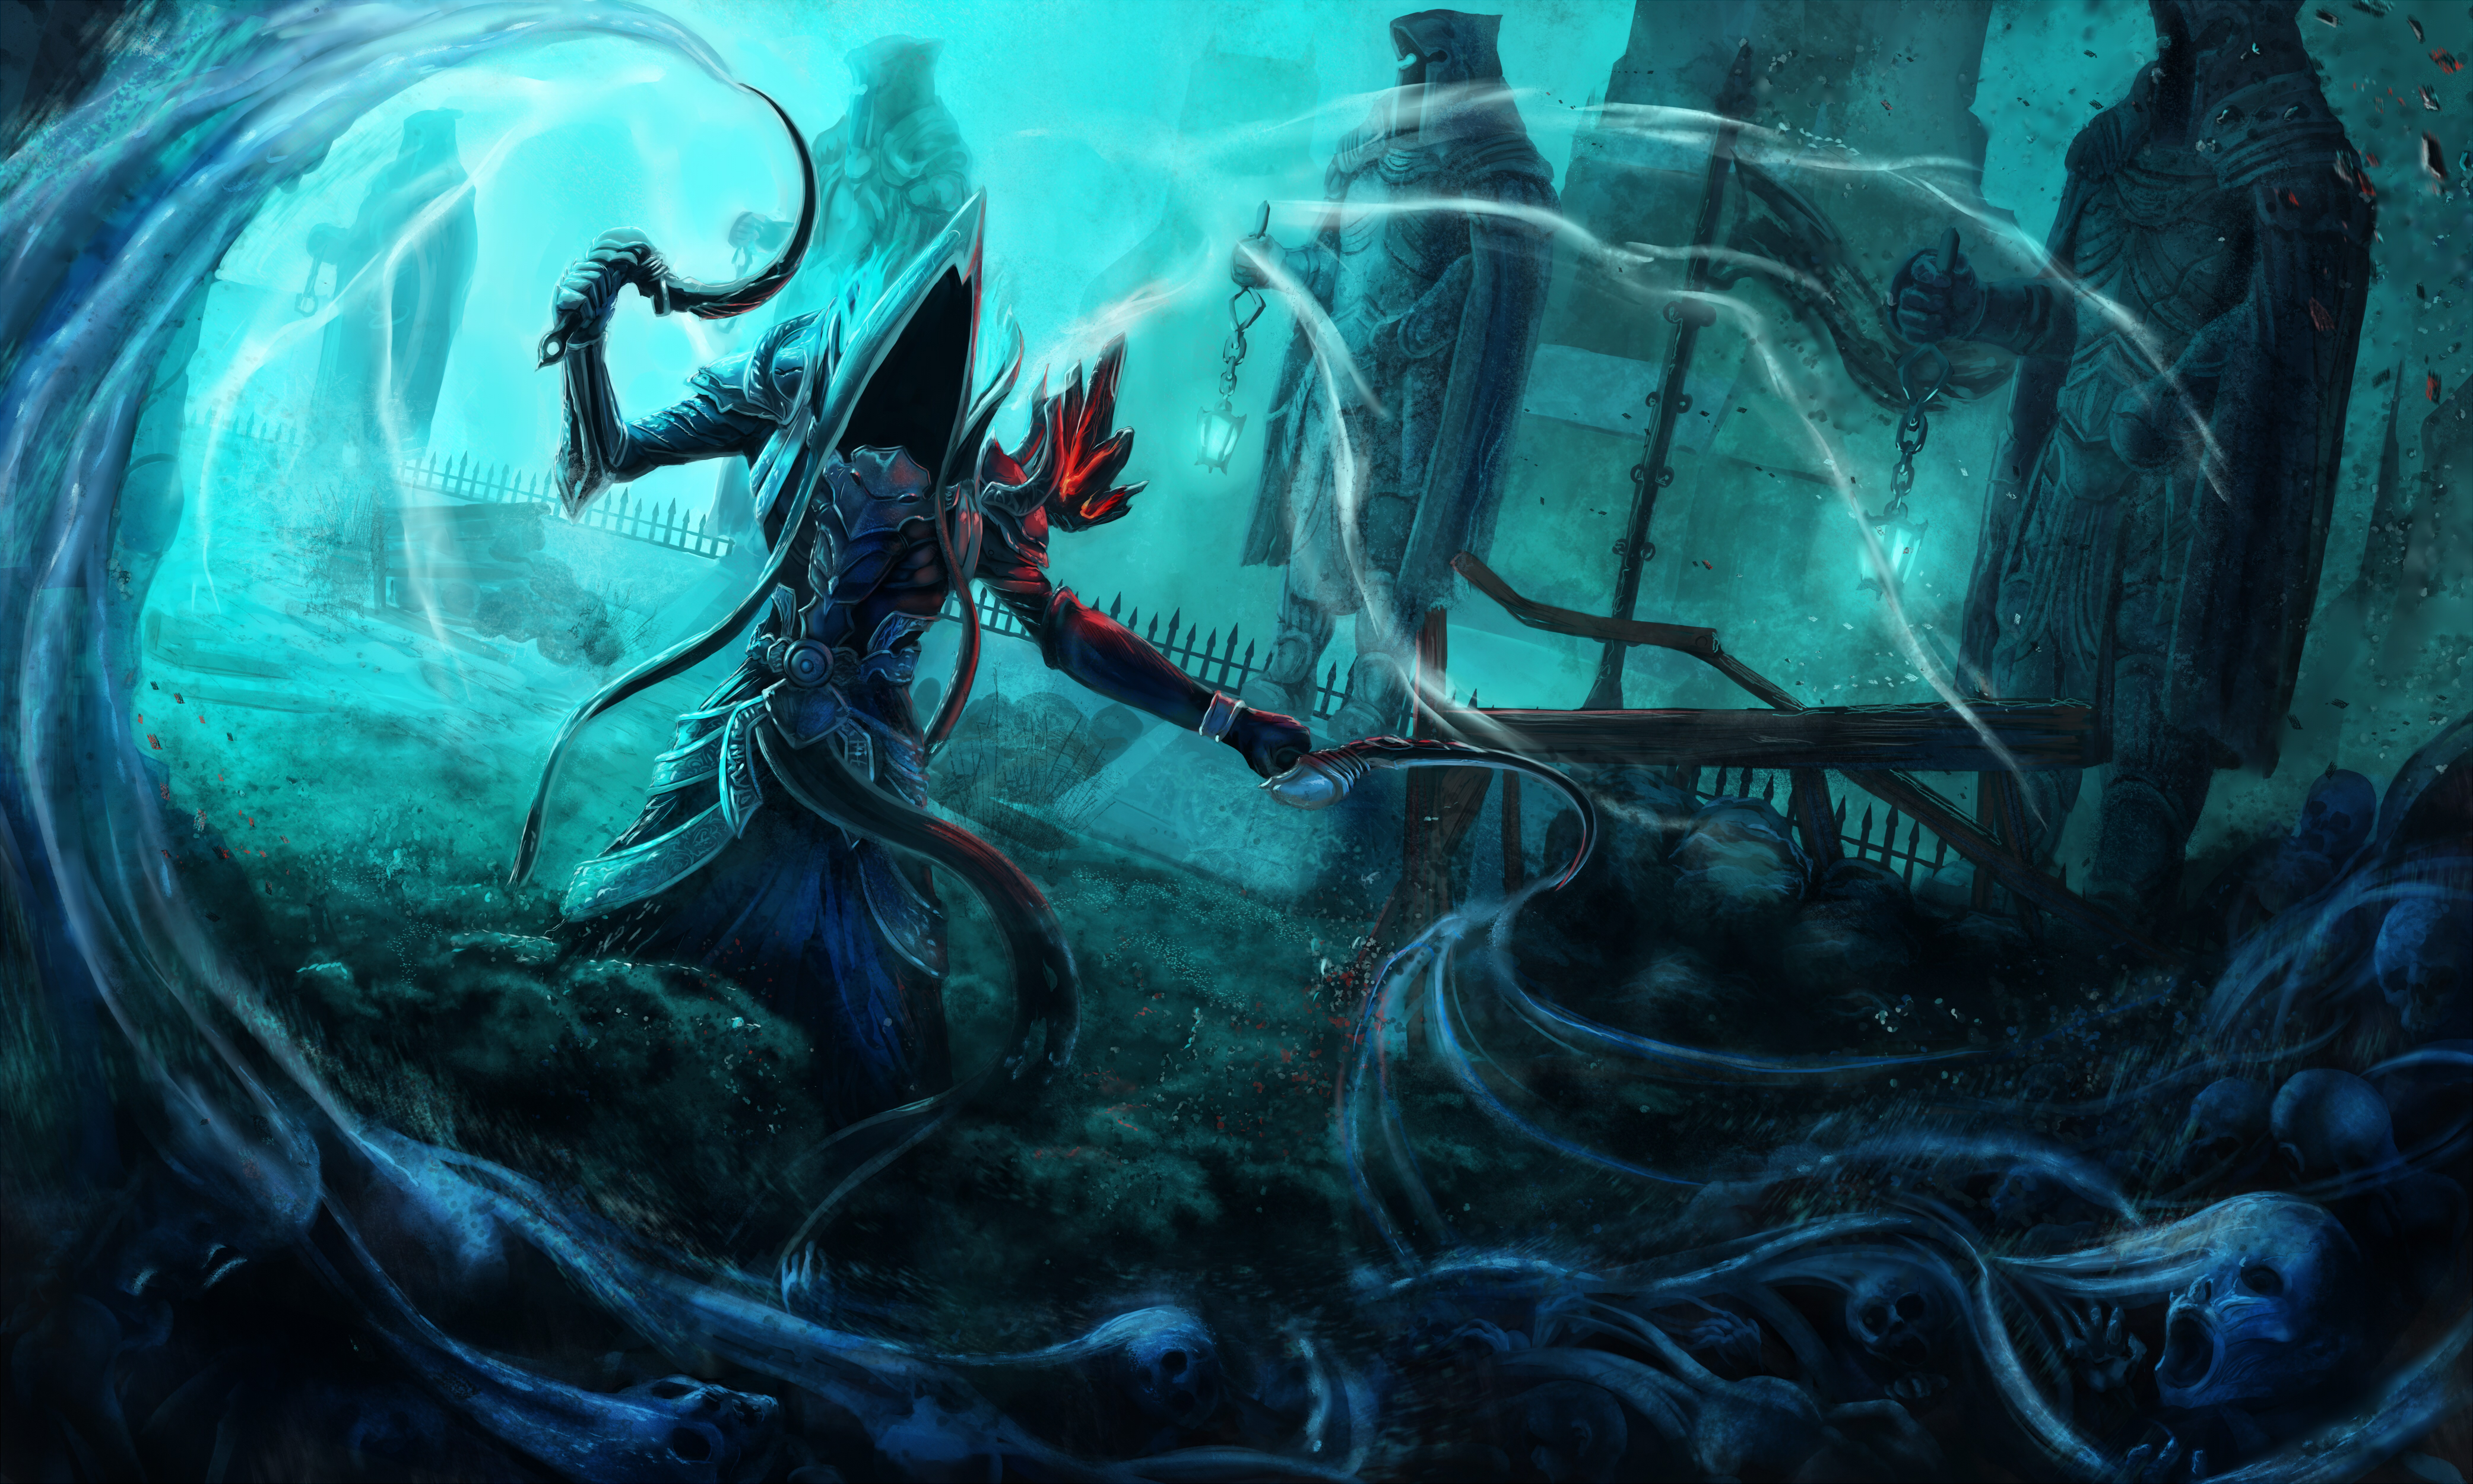 download Diablo III: Reaper of Souls